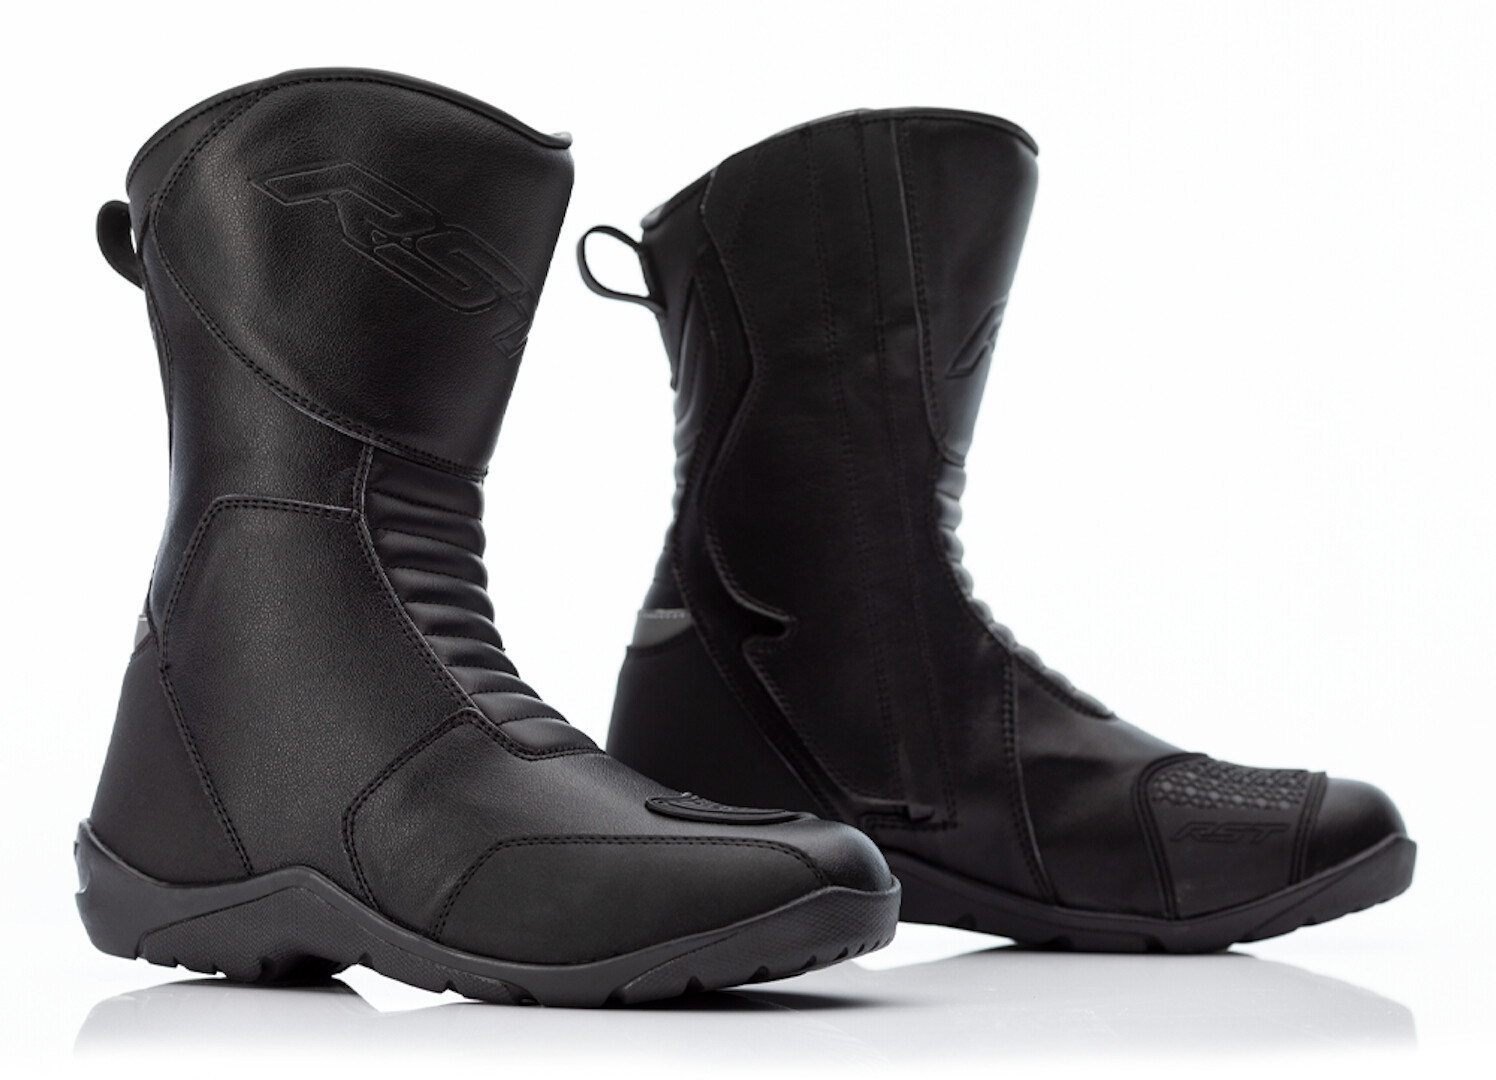 RST Axiom WP Ladies Motorcycle Boots, black, Size 41 for Women, black, Size 41 for Women